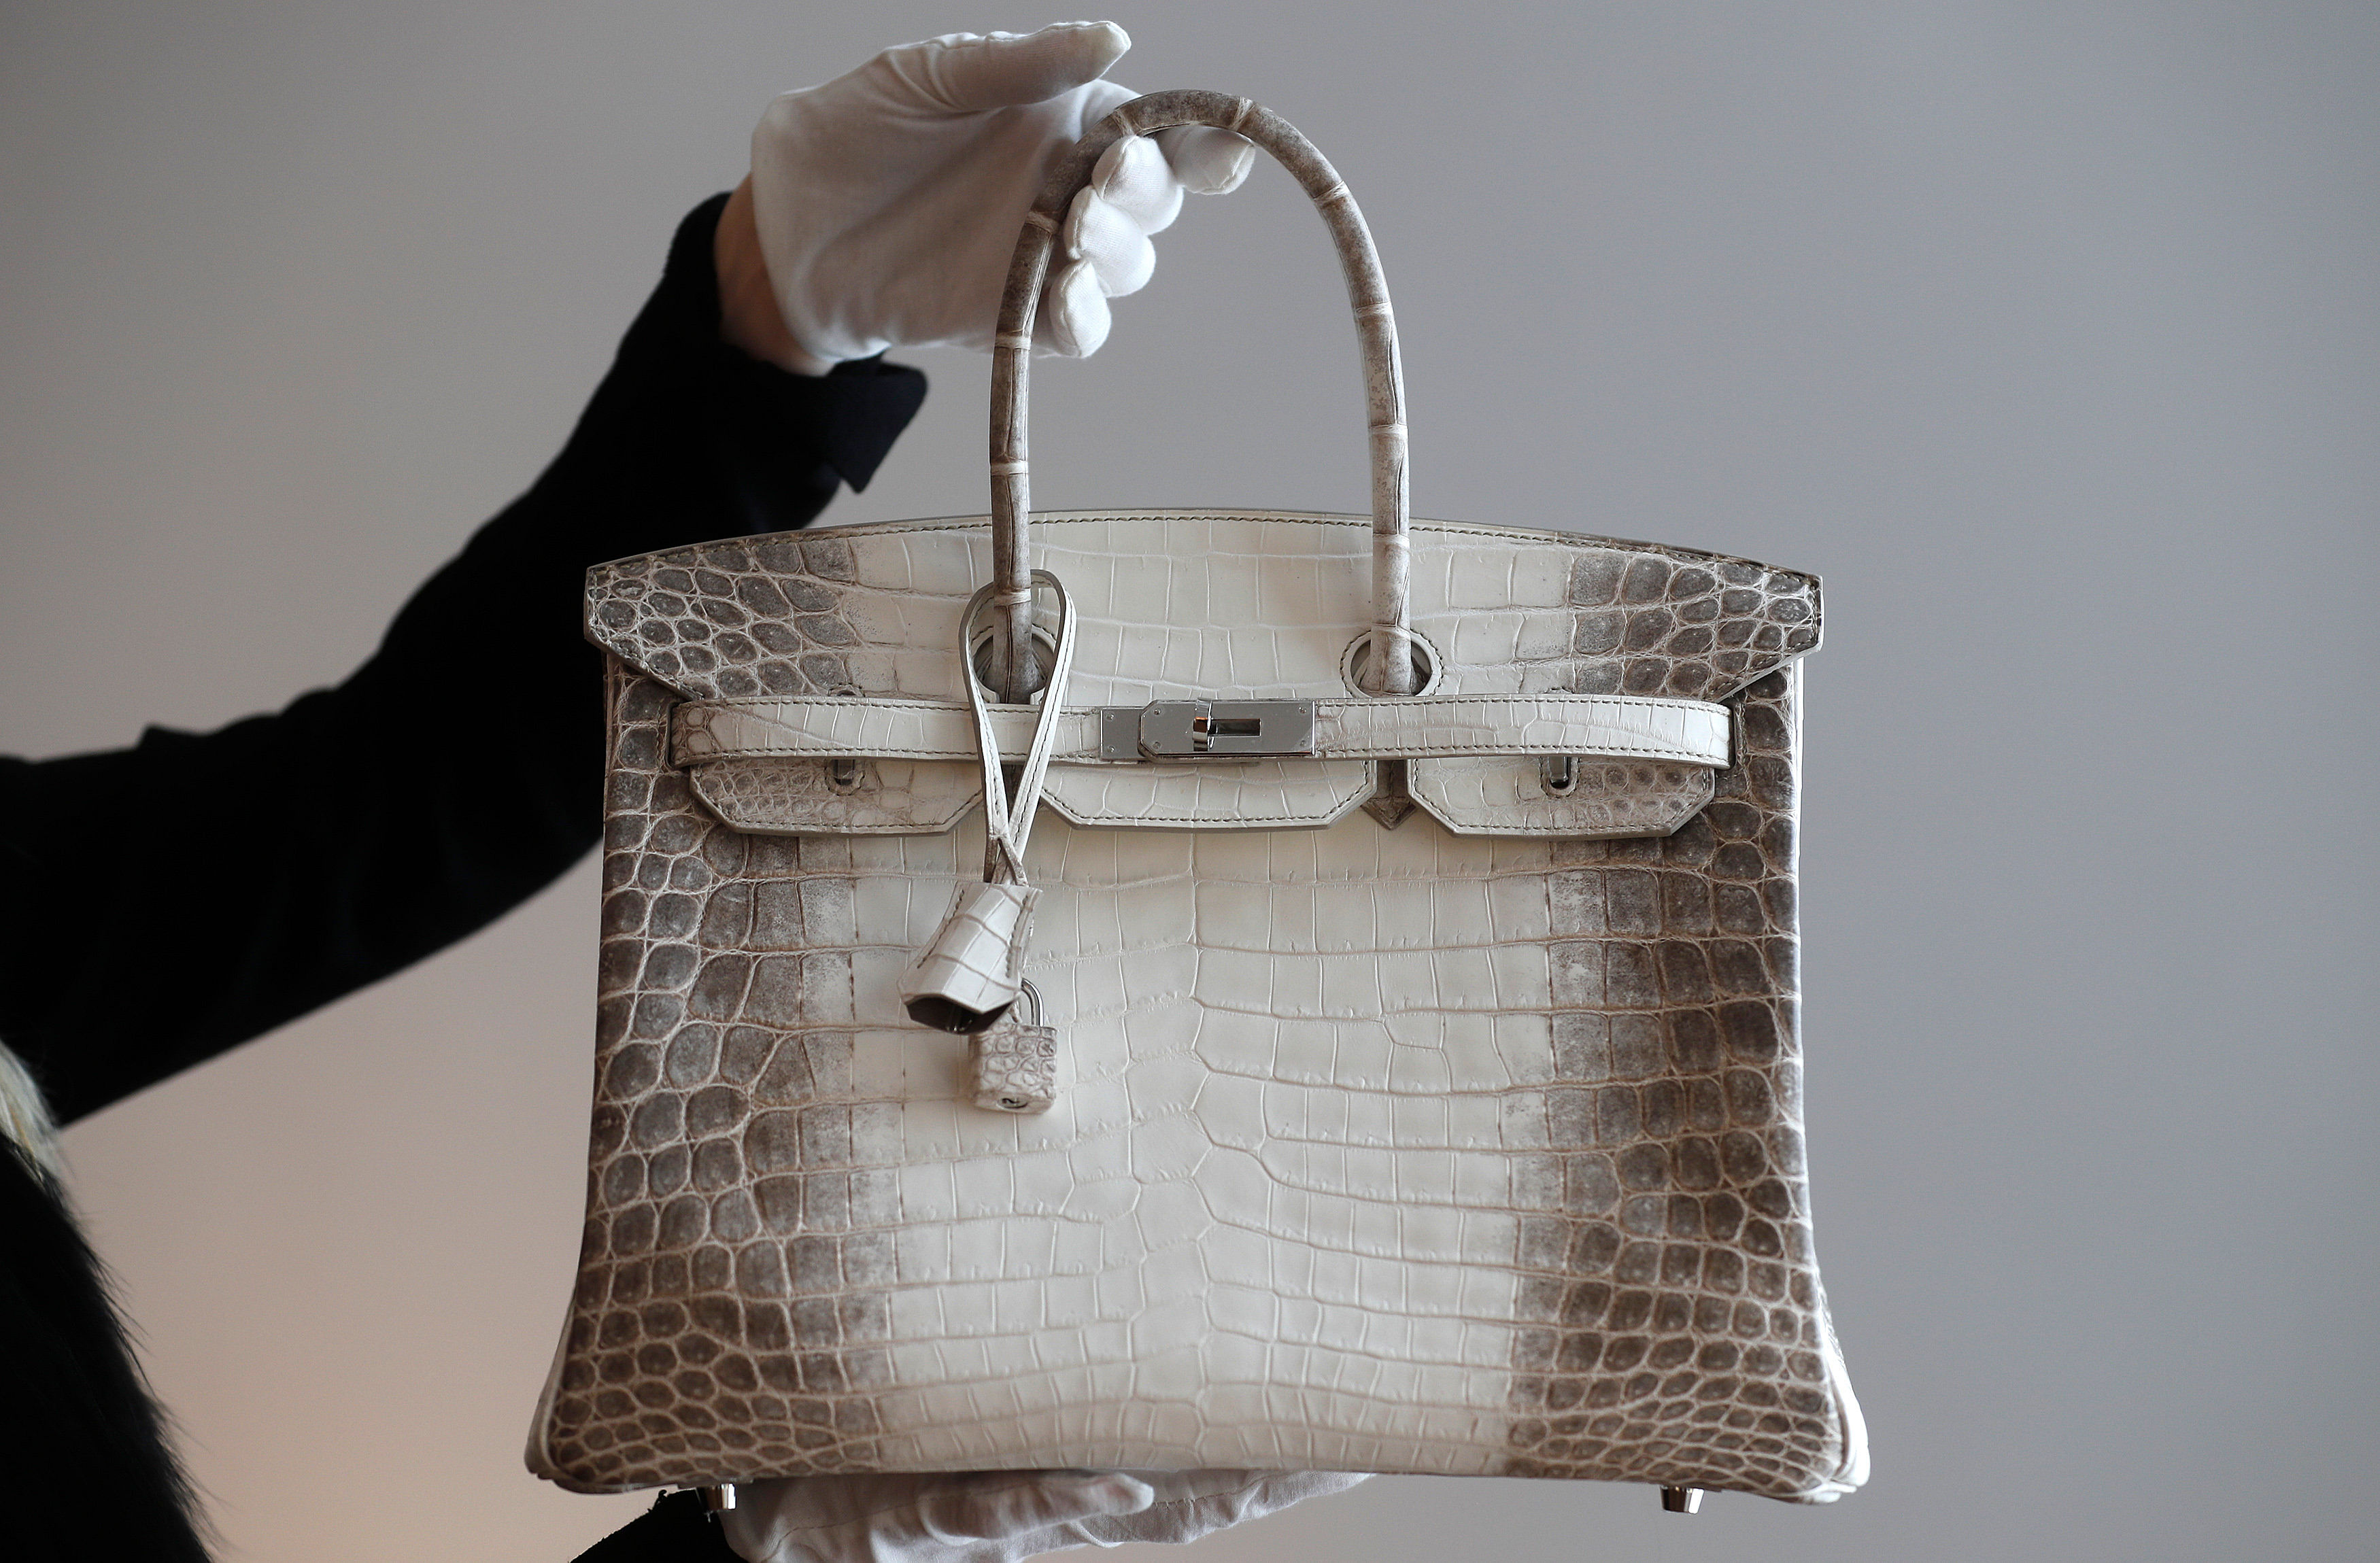 Crocodile-Skin Handbag Sells for a Record $222,912: Christie's